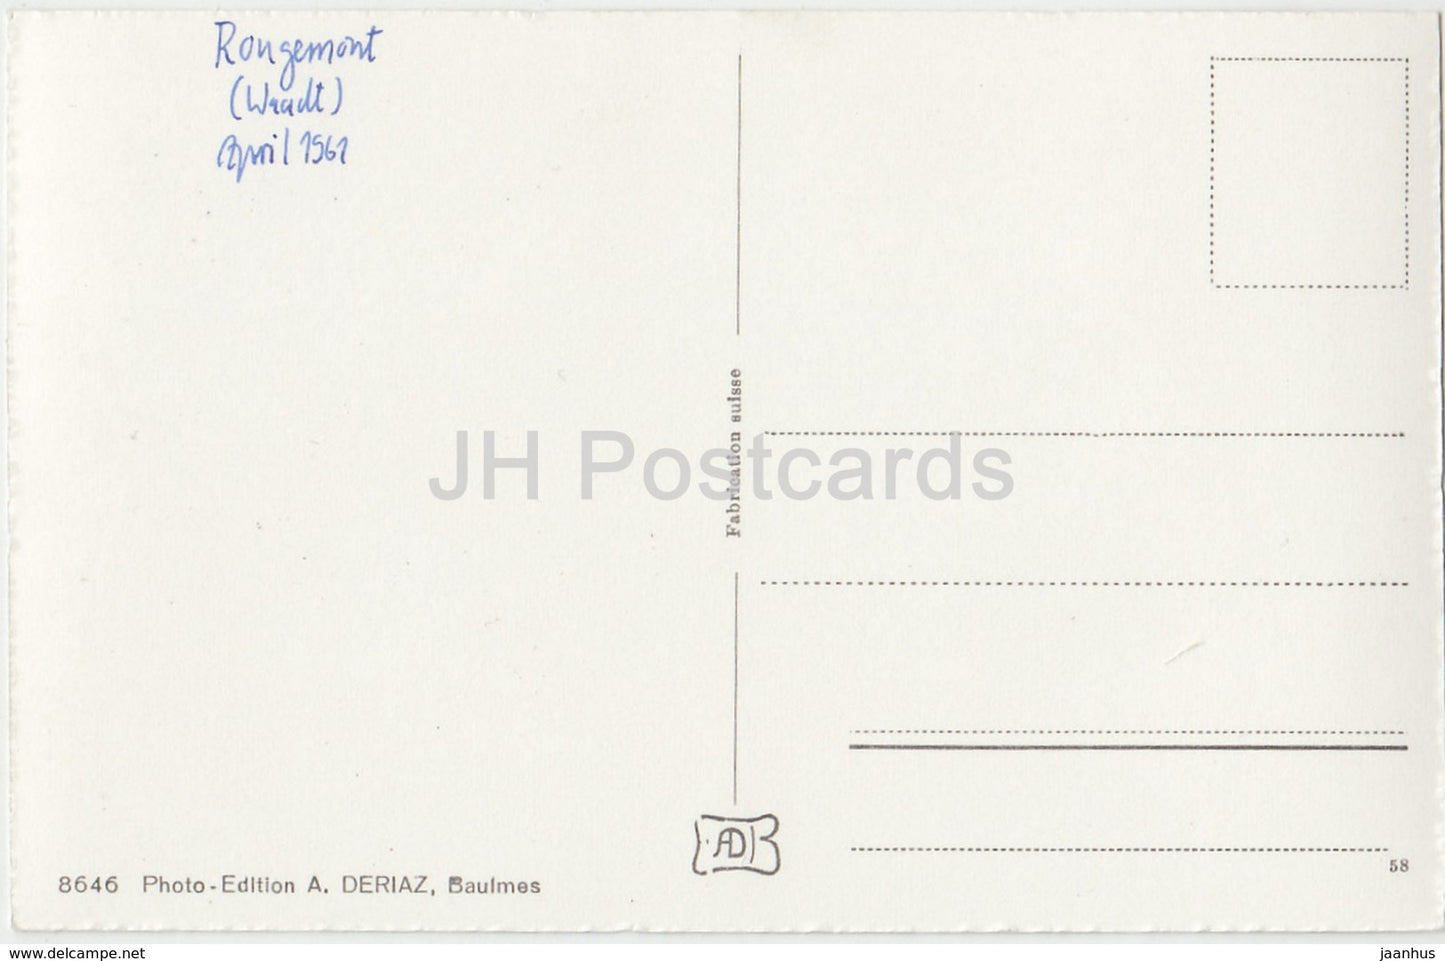 Rougemont et le Rodomont - 8646 - Switzerland - 1961 - used